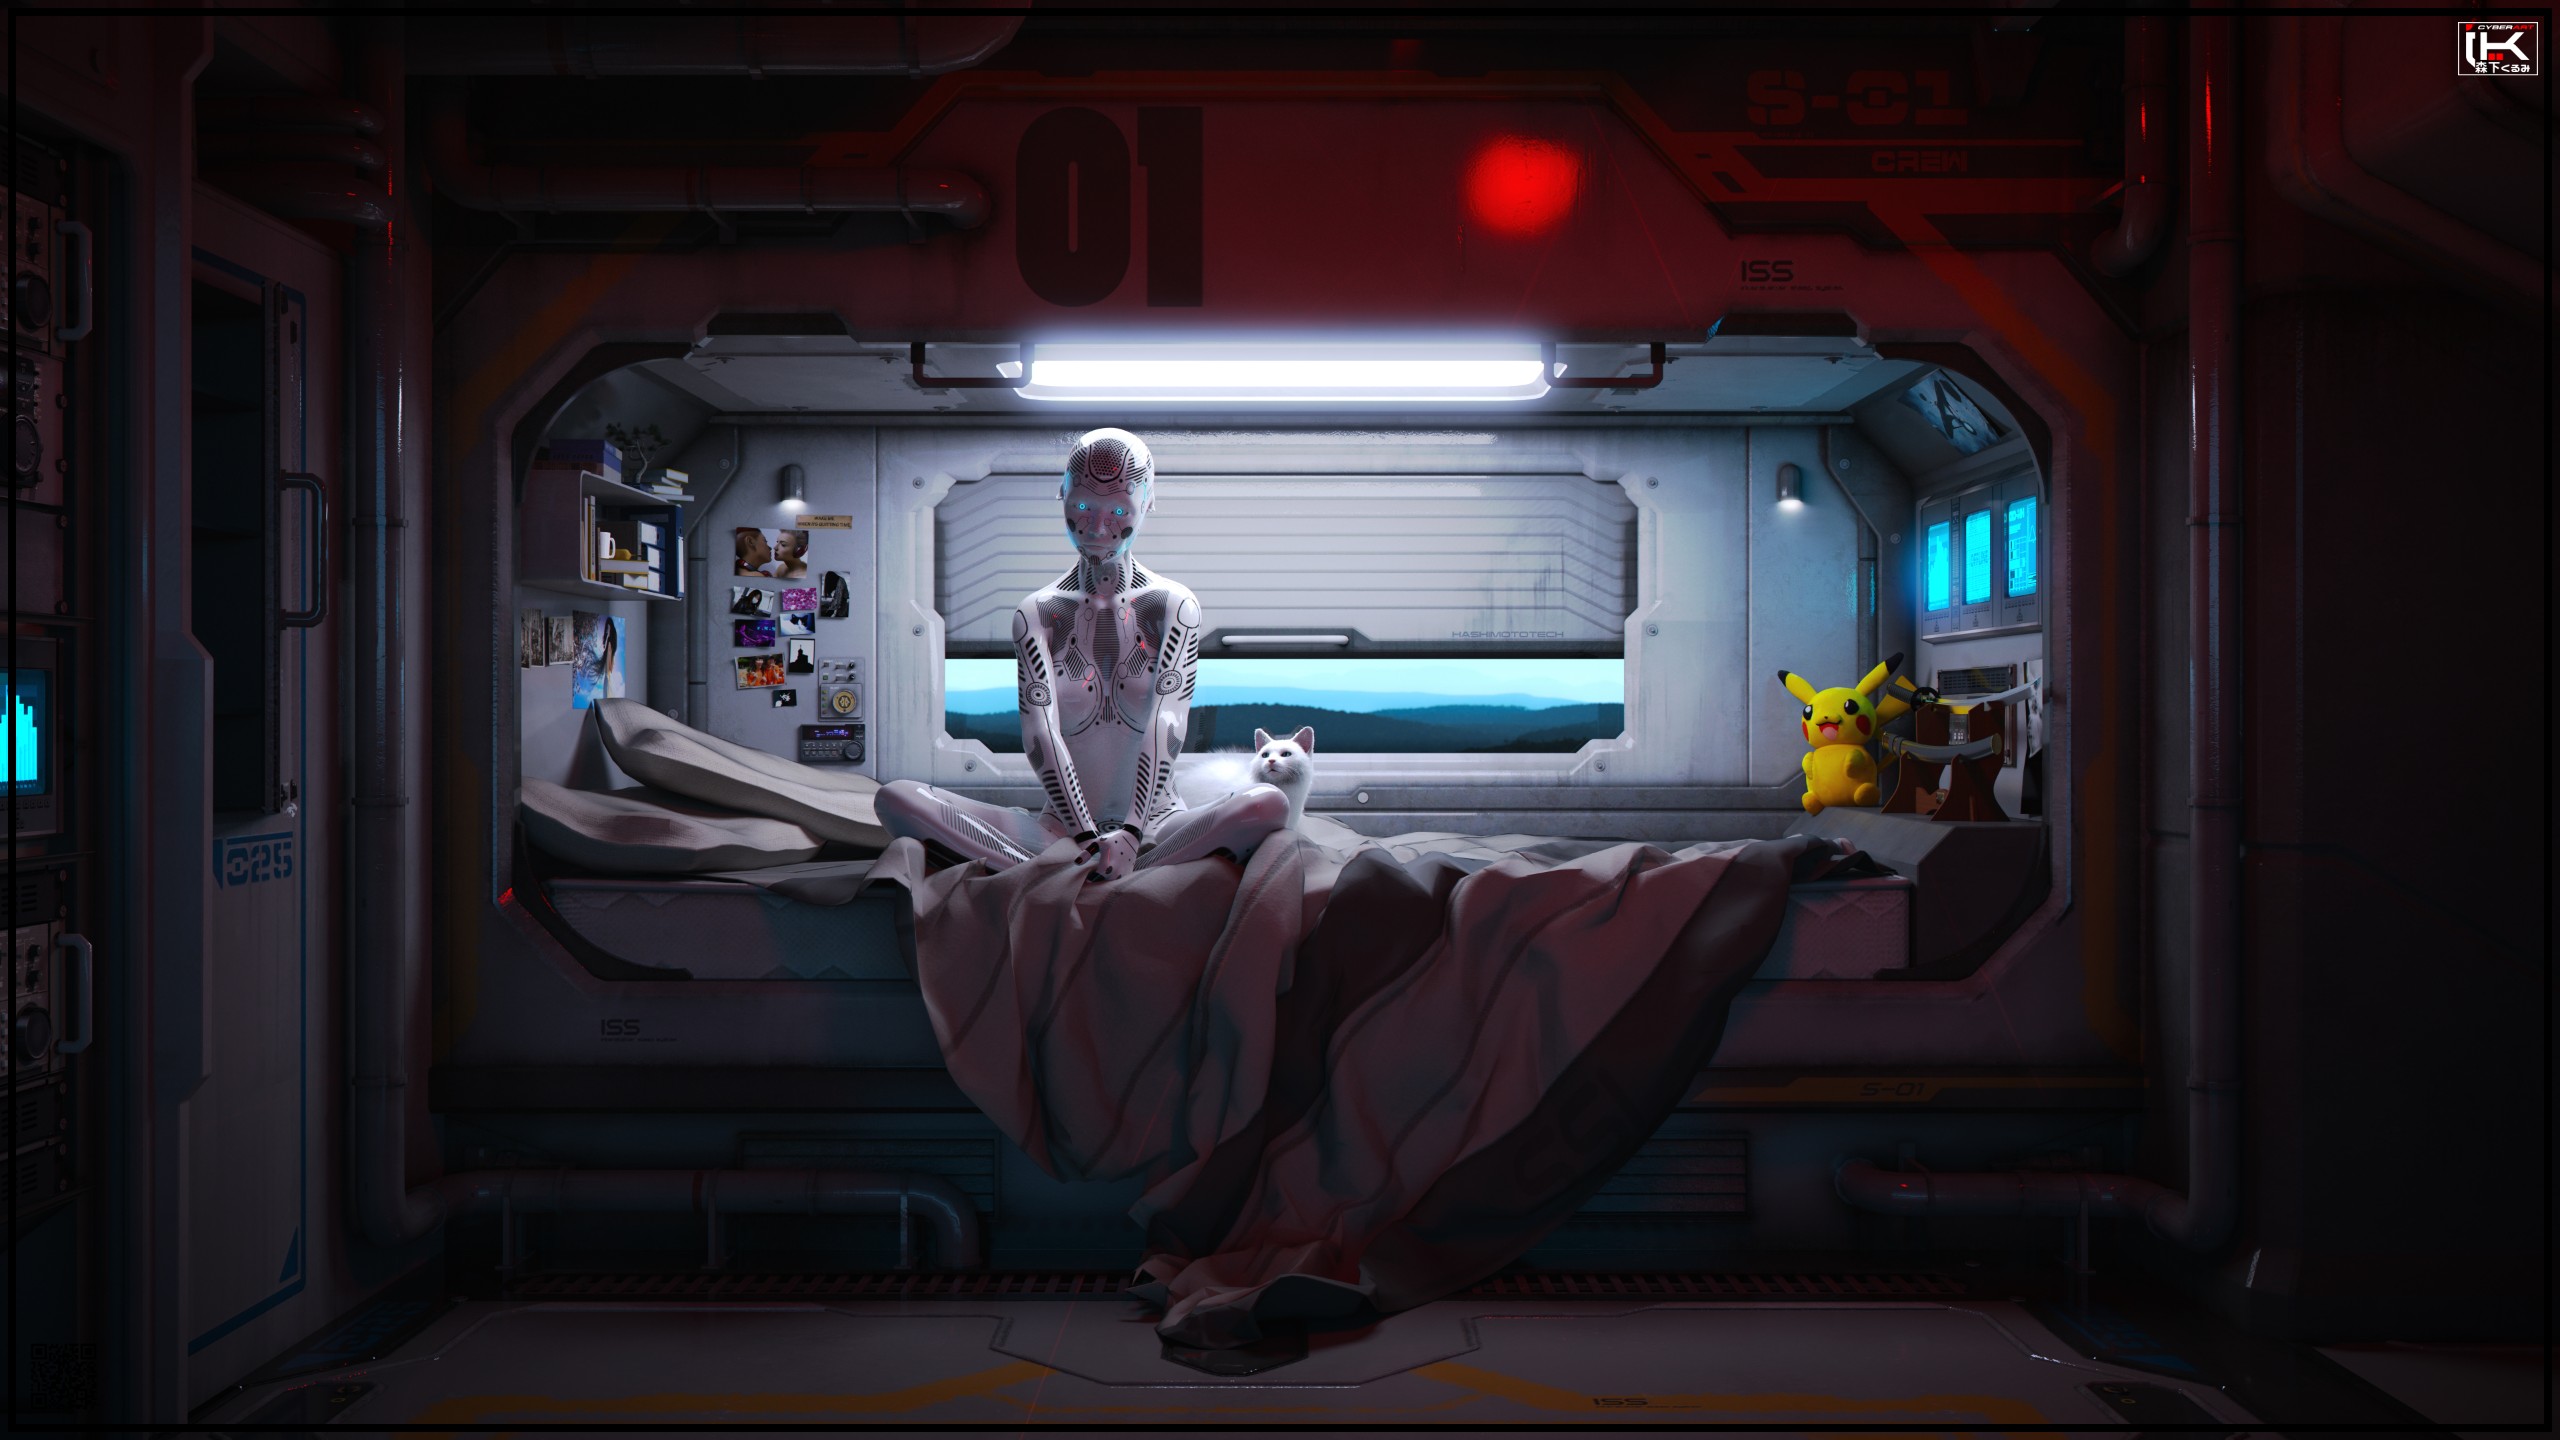 Space Station Robot Futuristic Cyborg 3D Render CGi Science Fiction Cats Machine Blue Eyes Sitting D 2560x1440